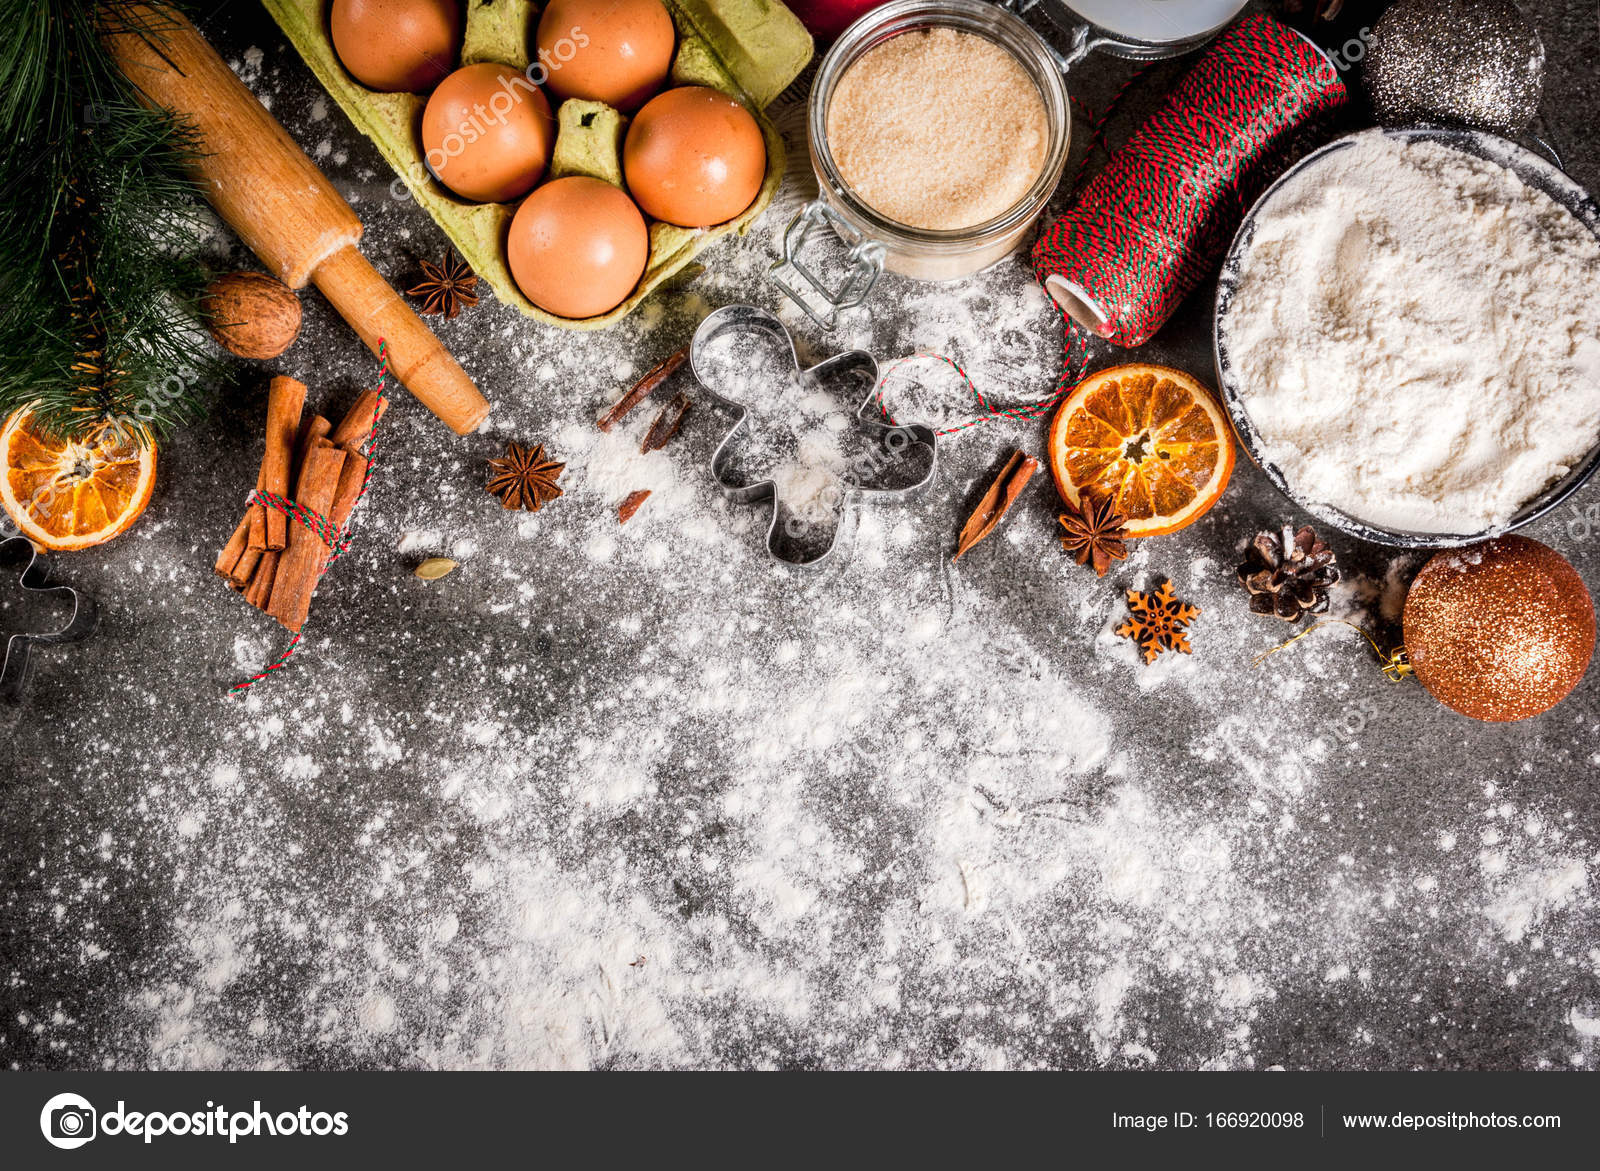 https://st3.depositphotos.com/9012638/16692/i/1600/depositphotos_166920098-stock-photo-christmas-new-year-holiday-cooking.jpg